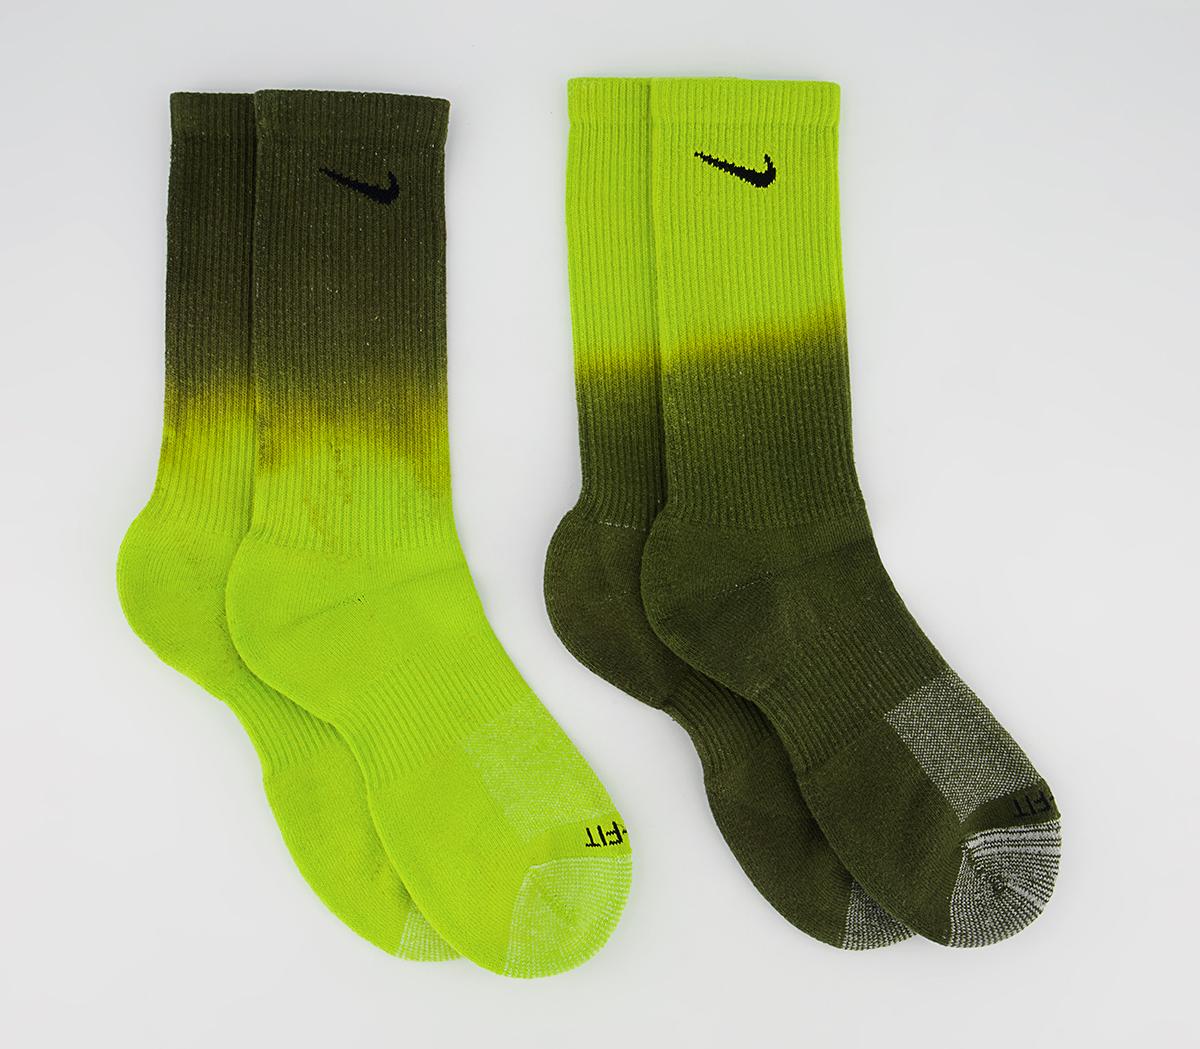 NikeEveryday Plus Socks 2 PairsGreen Multi